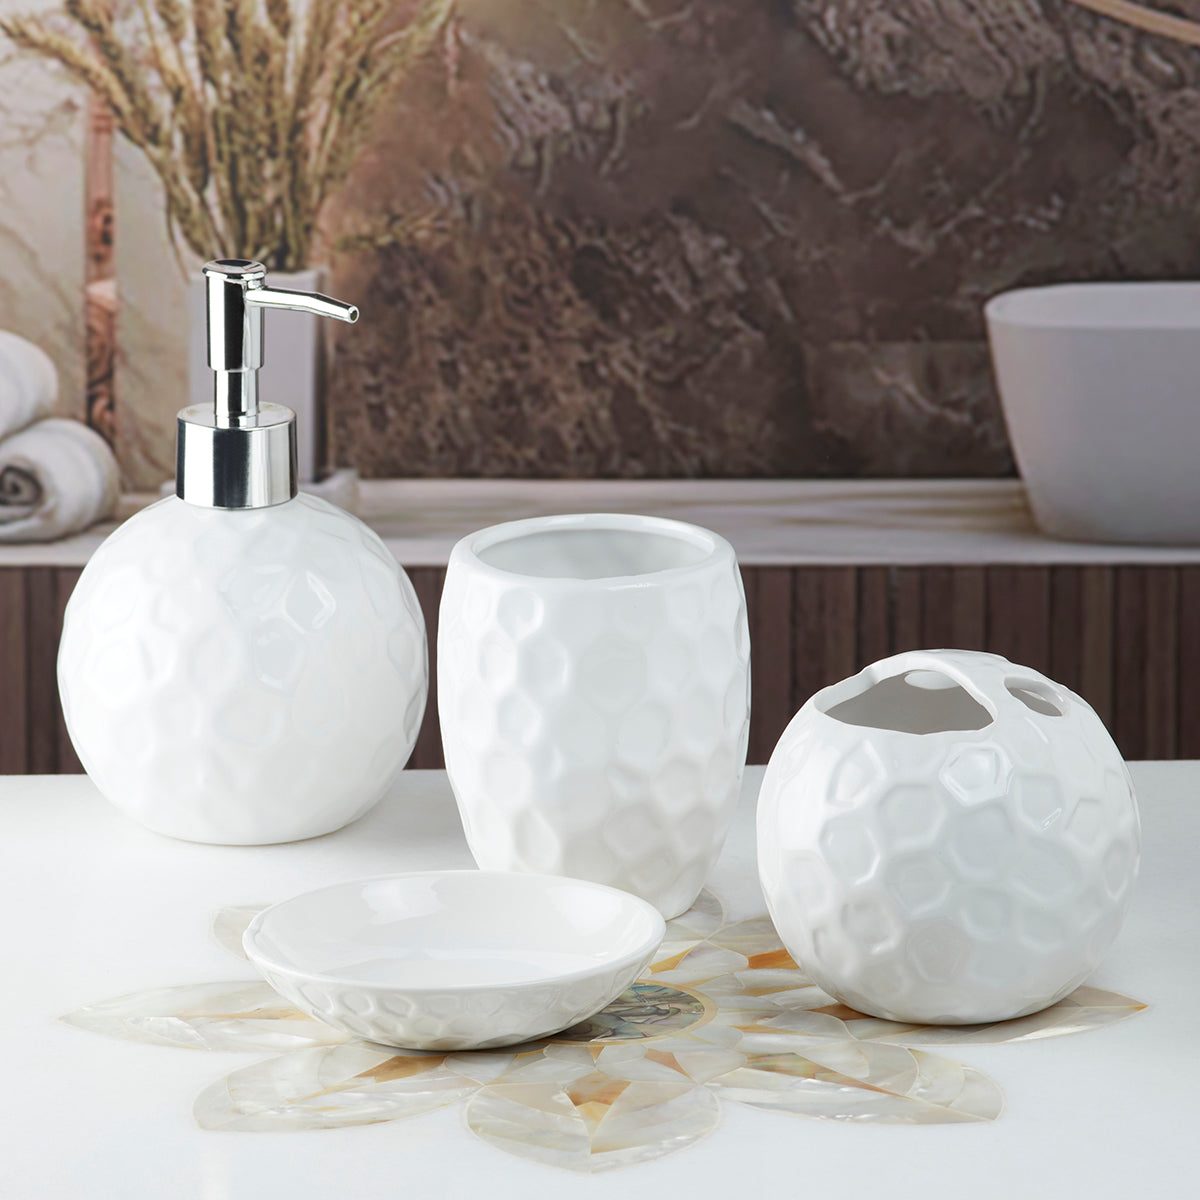 Ceramic Bathroom Accessories Set of 4 Bath Set with Soap Dispenser (10117)